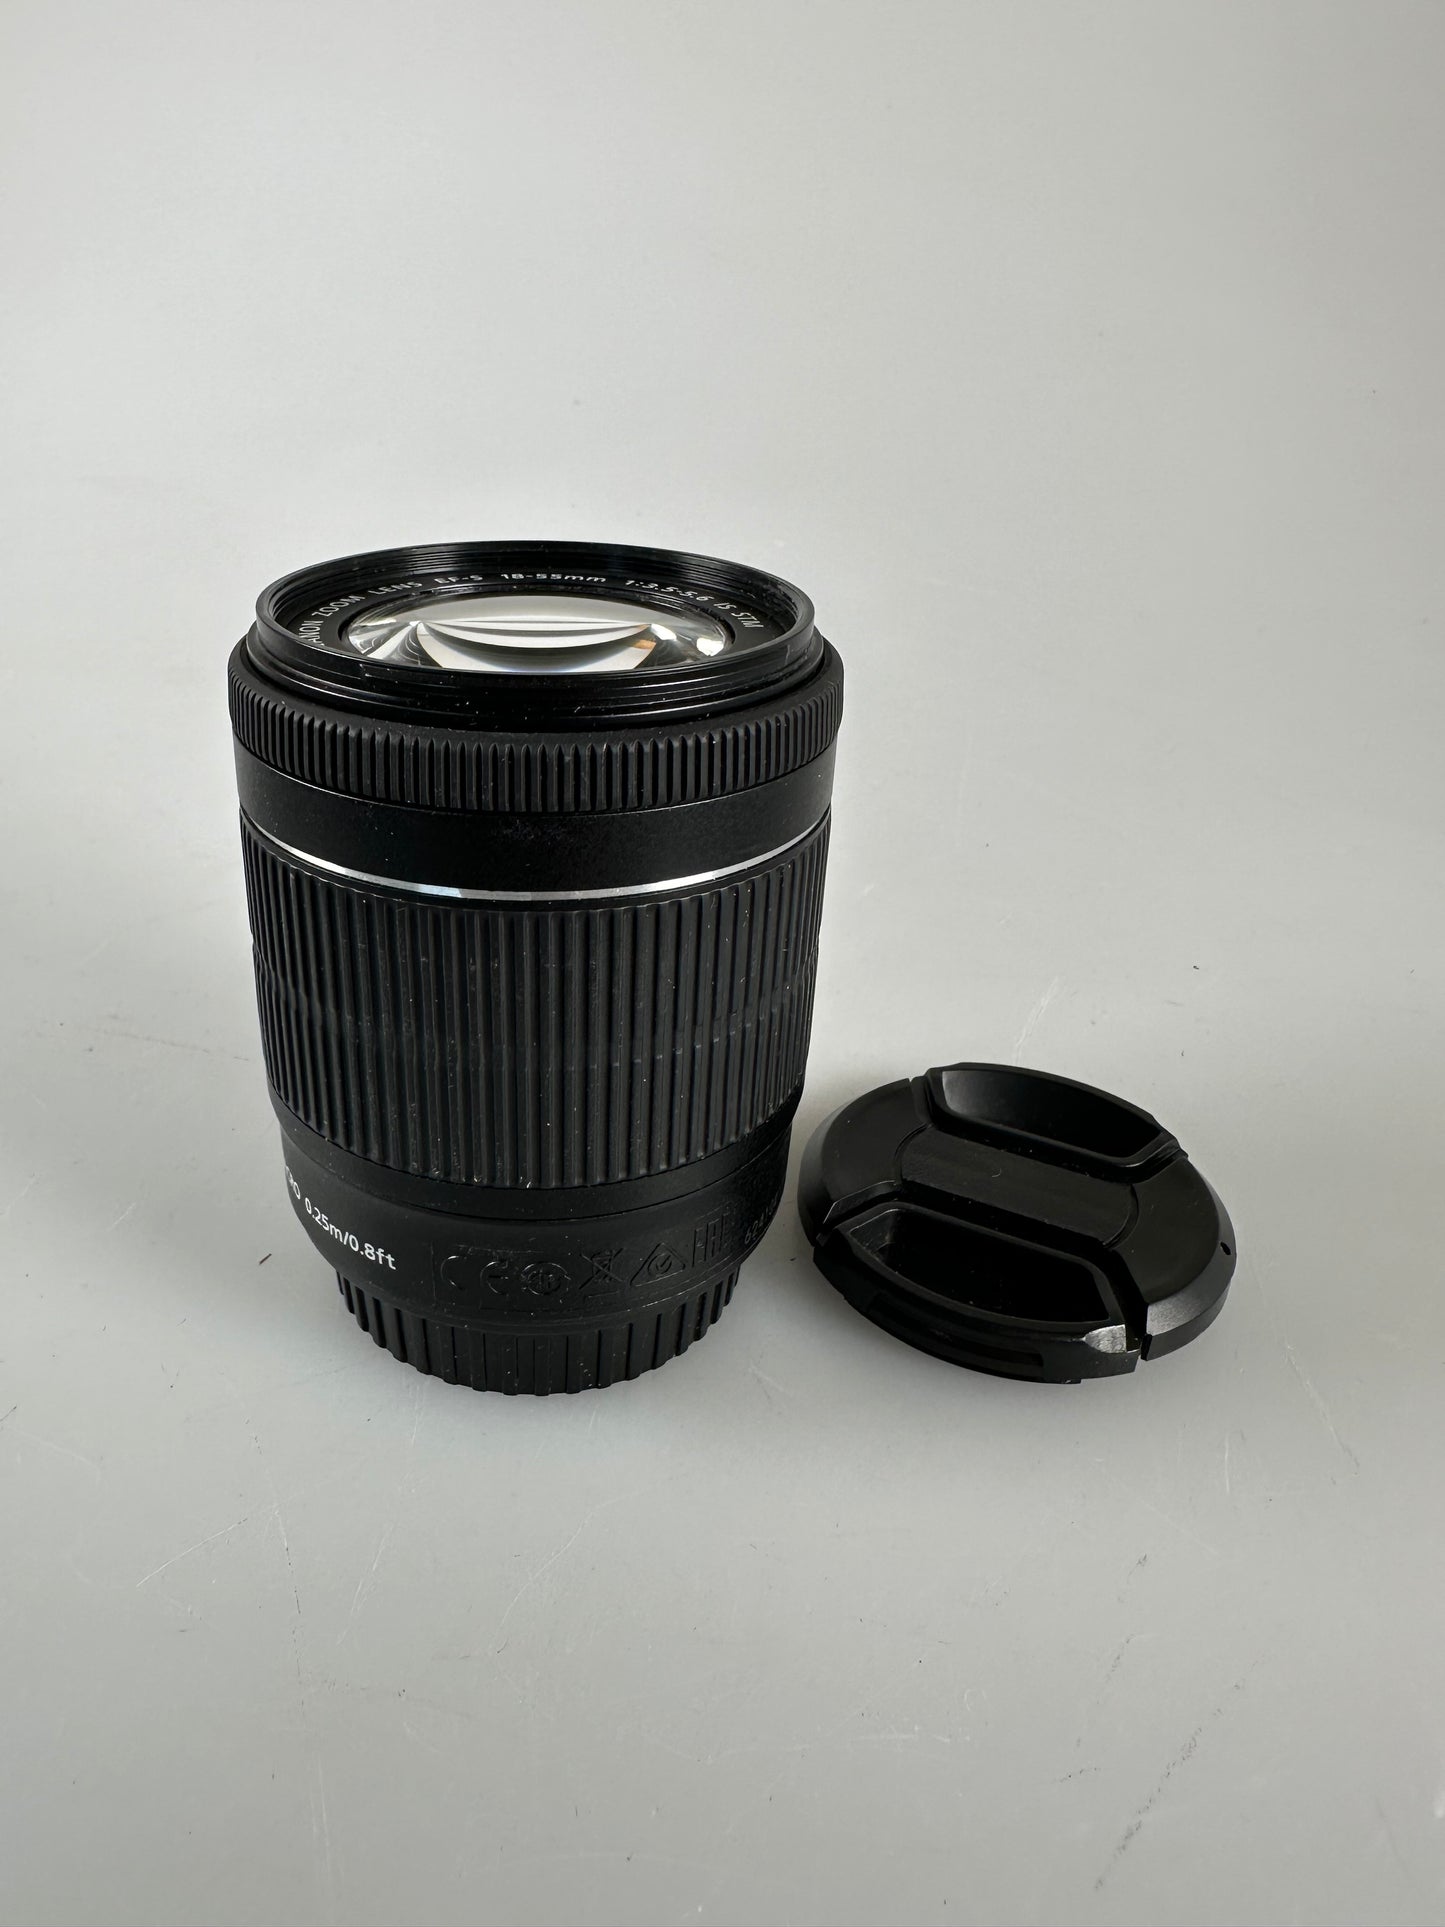 Canon EF-S 18-55mm 1:3.5-5.6 IS II EFS Image Stabilizer Macro Zoom Lens